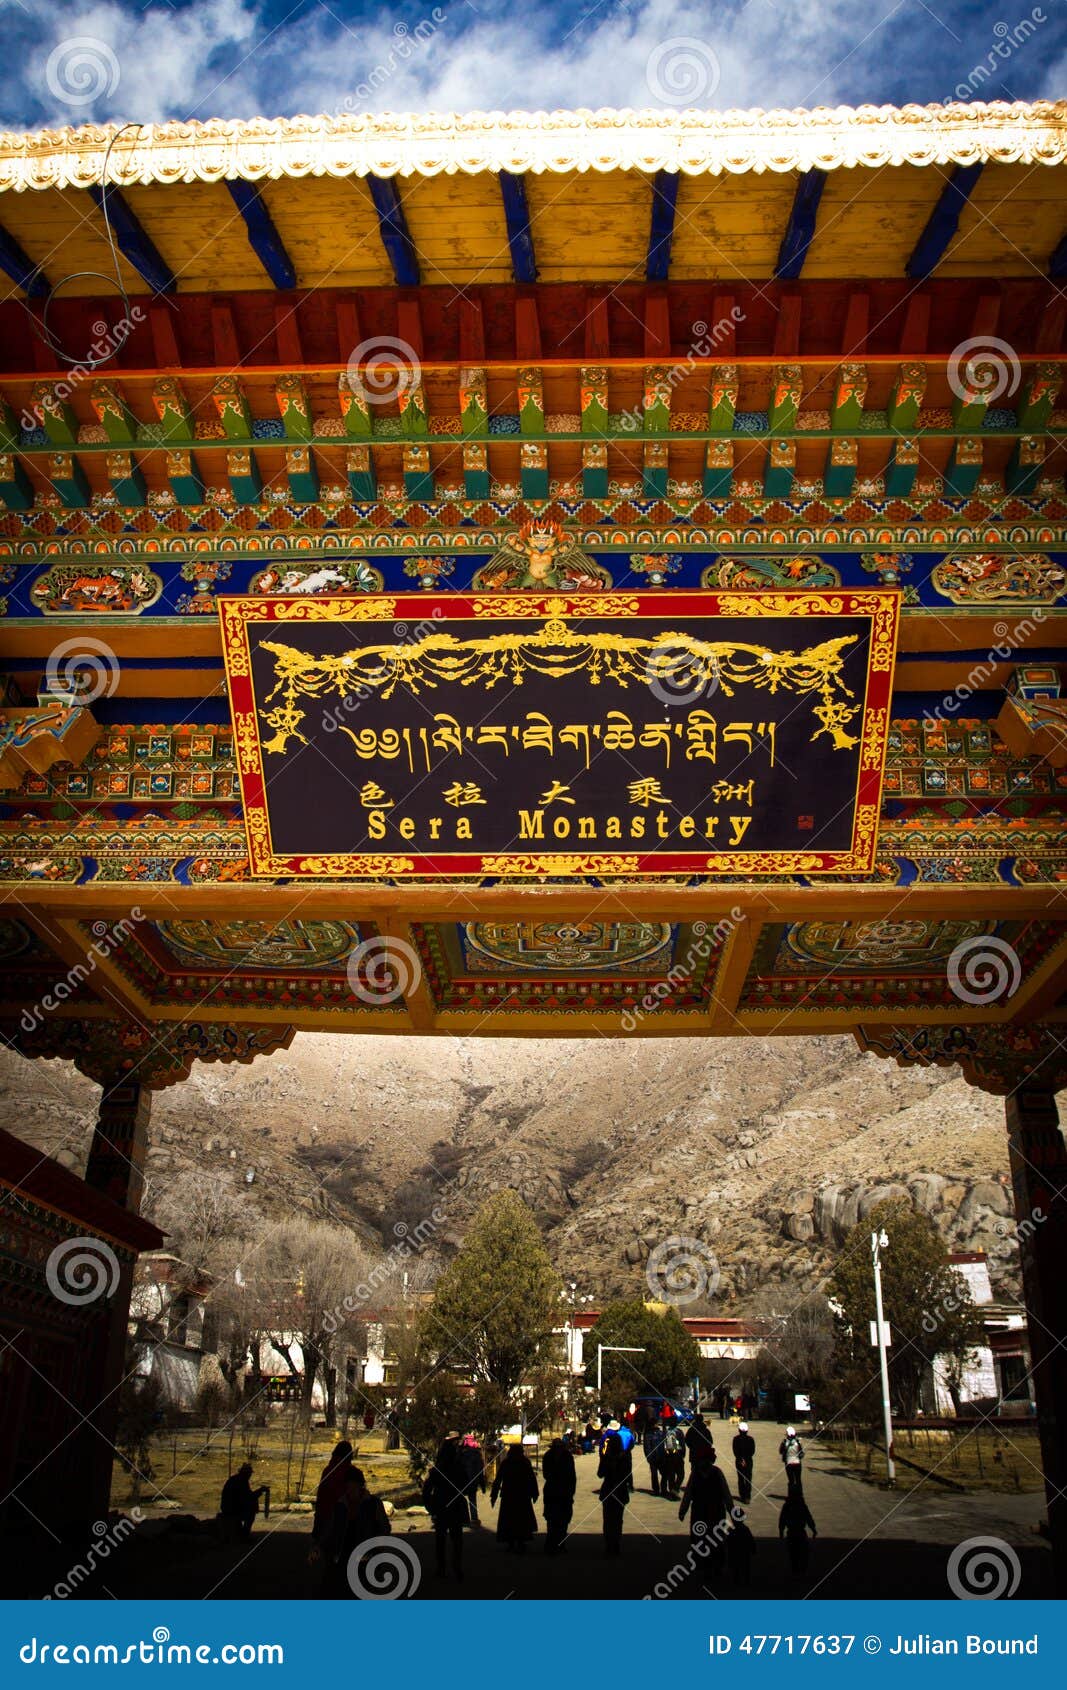 sera monastery entrance, lhasa, tibet